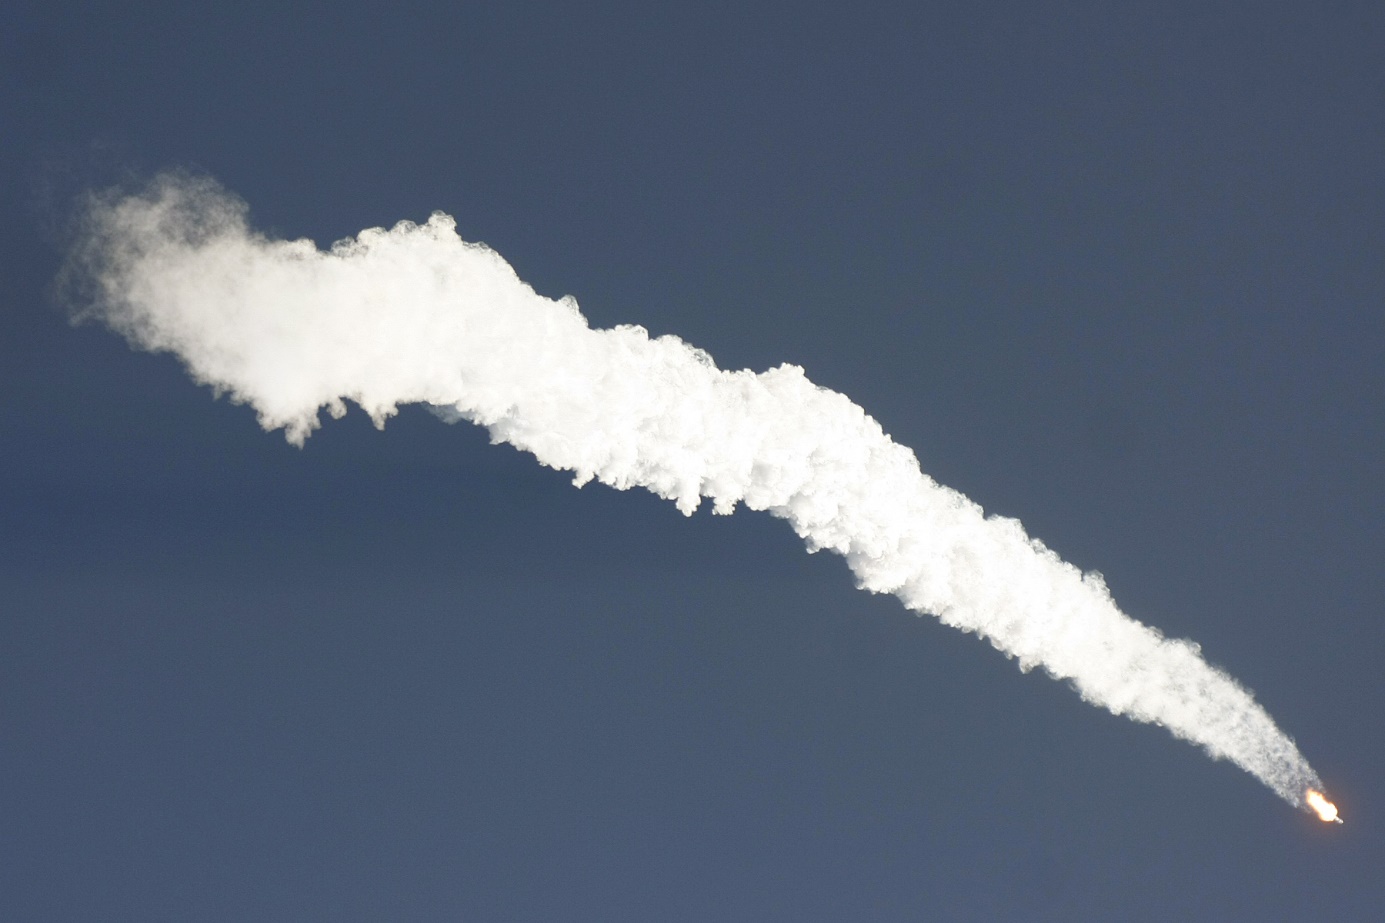 Falcon 9 Starlink 4-21 Downrange, Photo Courtesy Carleton Bailie, Spaceline